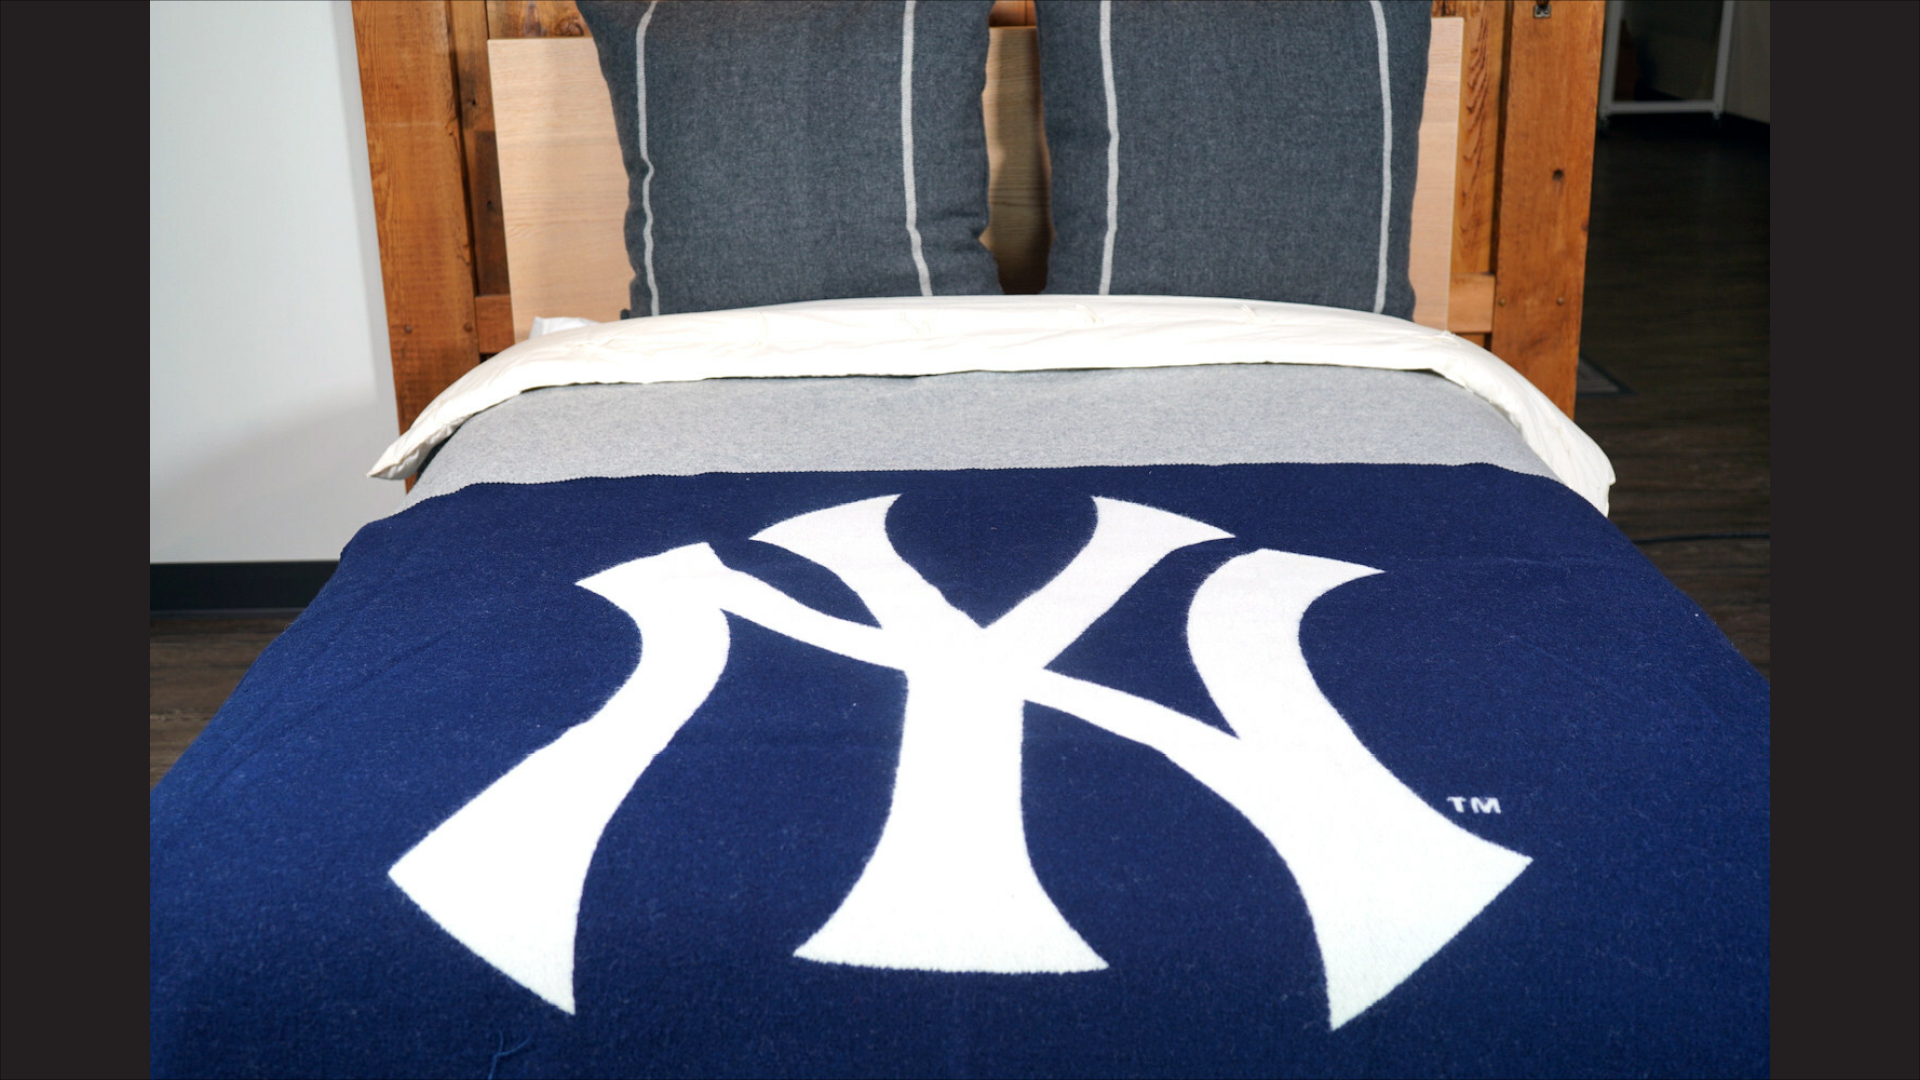 Bronx Bubble Yankees Jacket  MLB Relaunch Bronx Bubble jacket